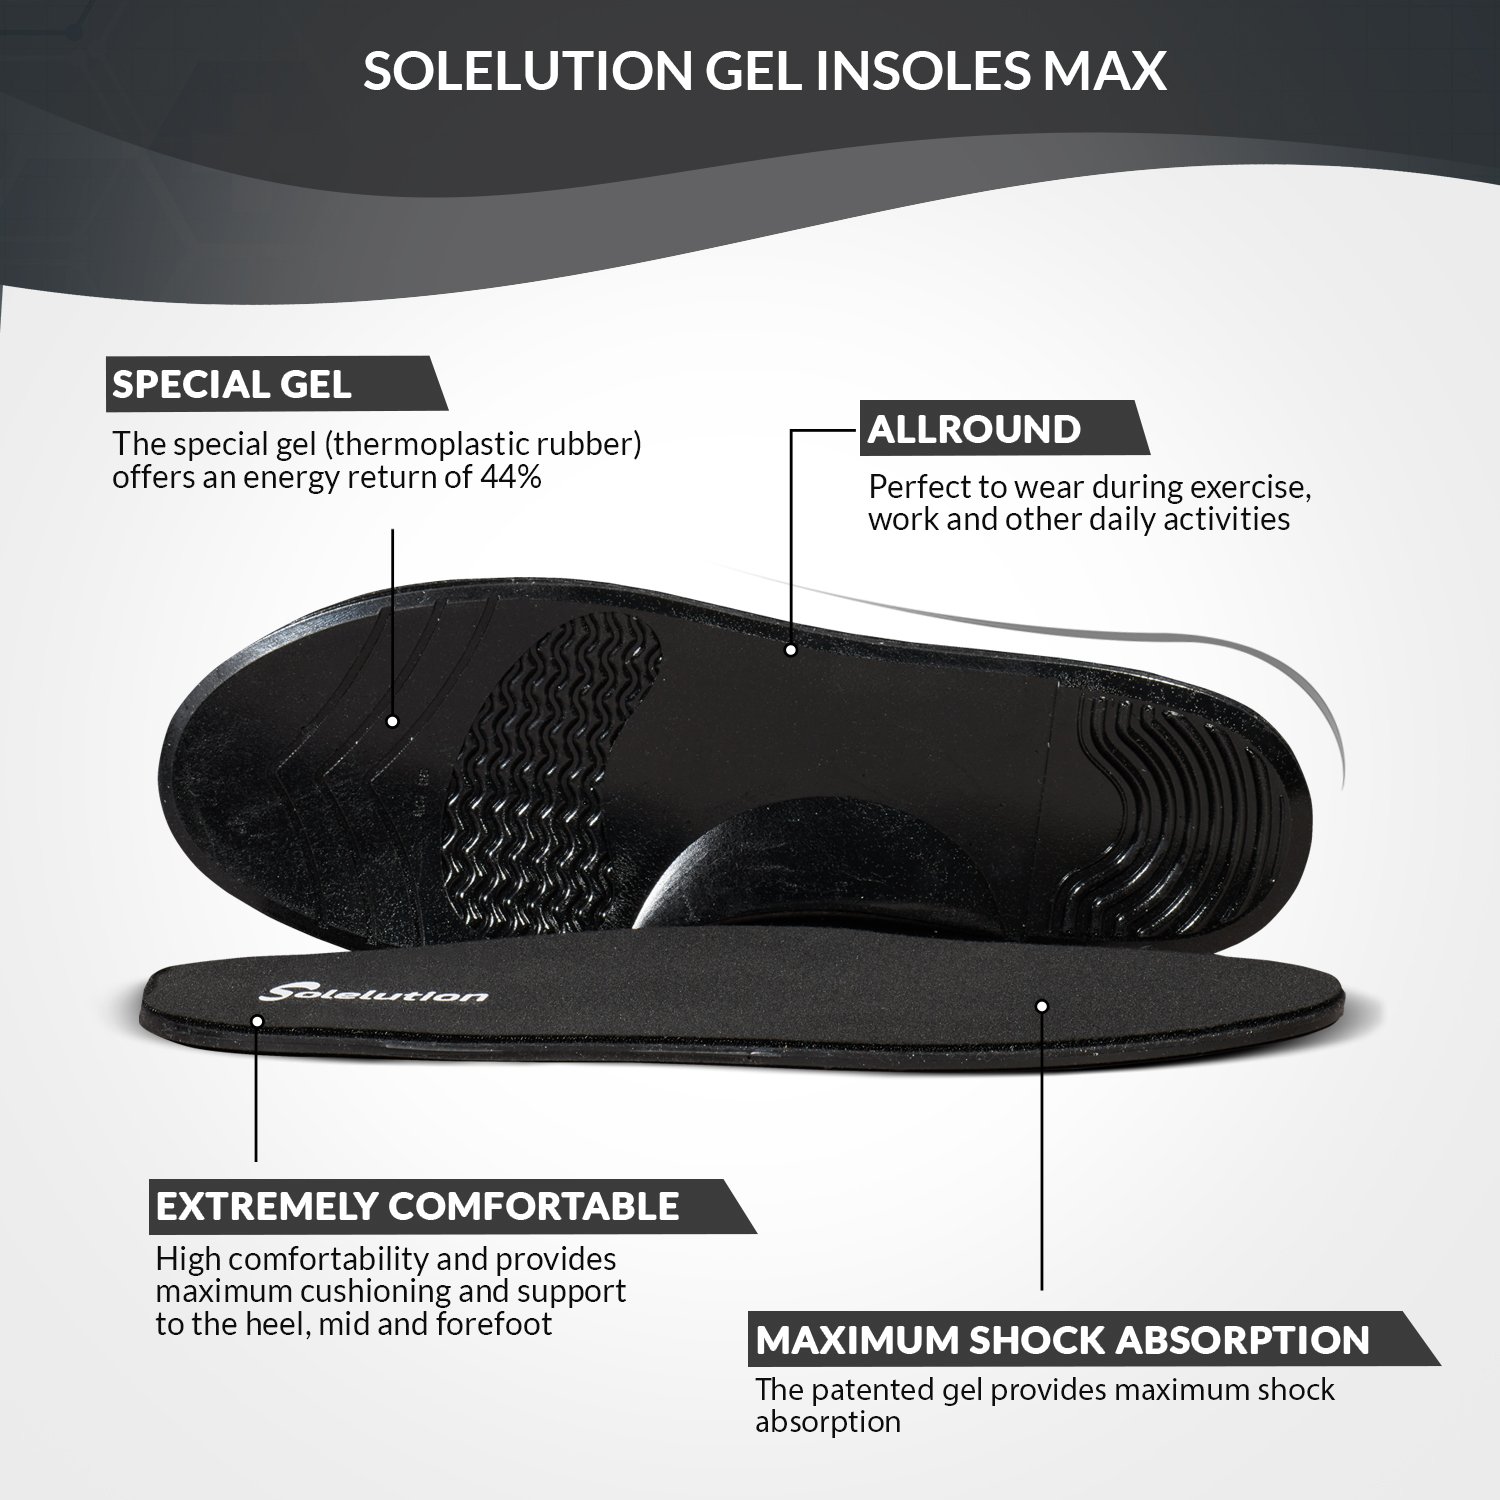 Solelution Gel Insoles Max (per pair) productinformation